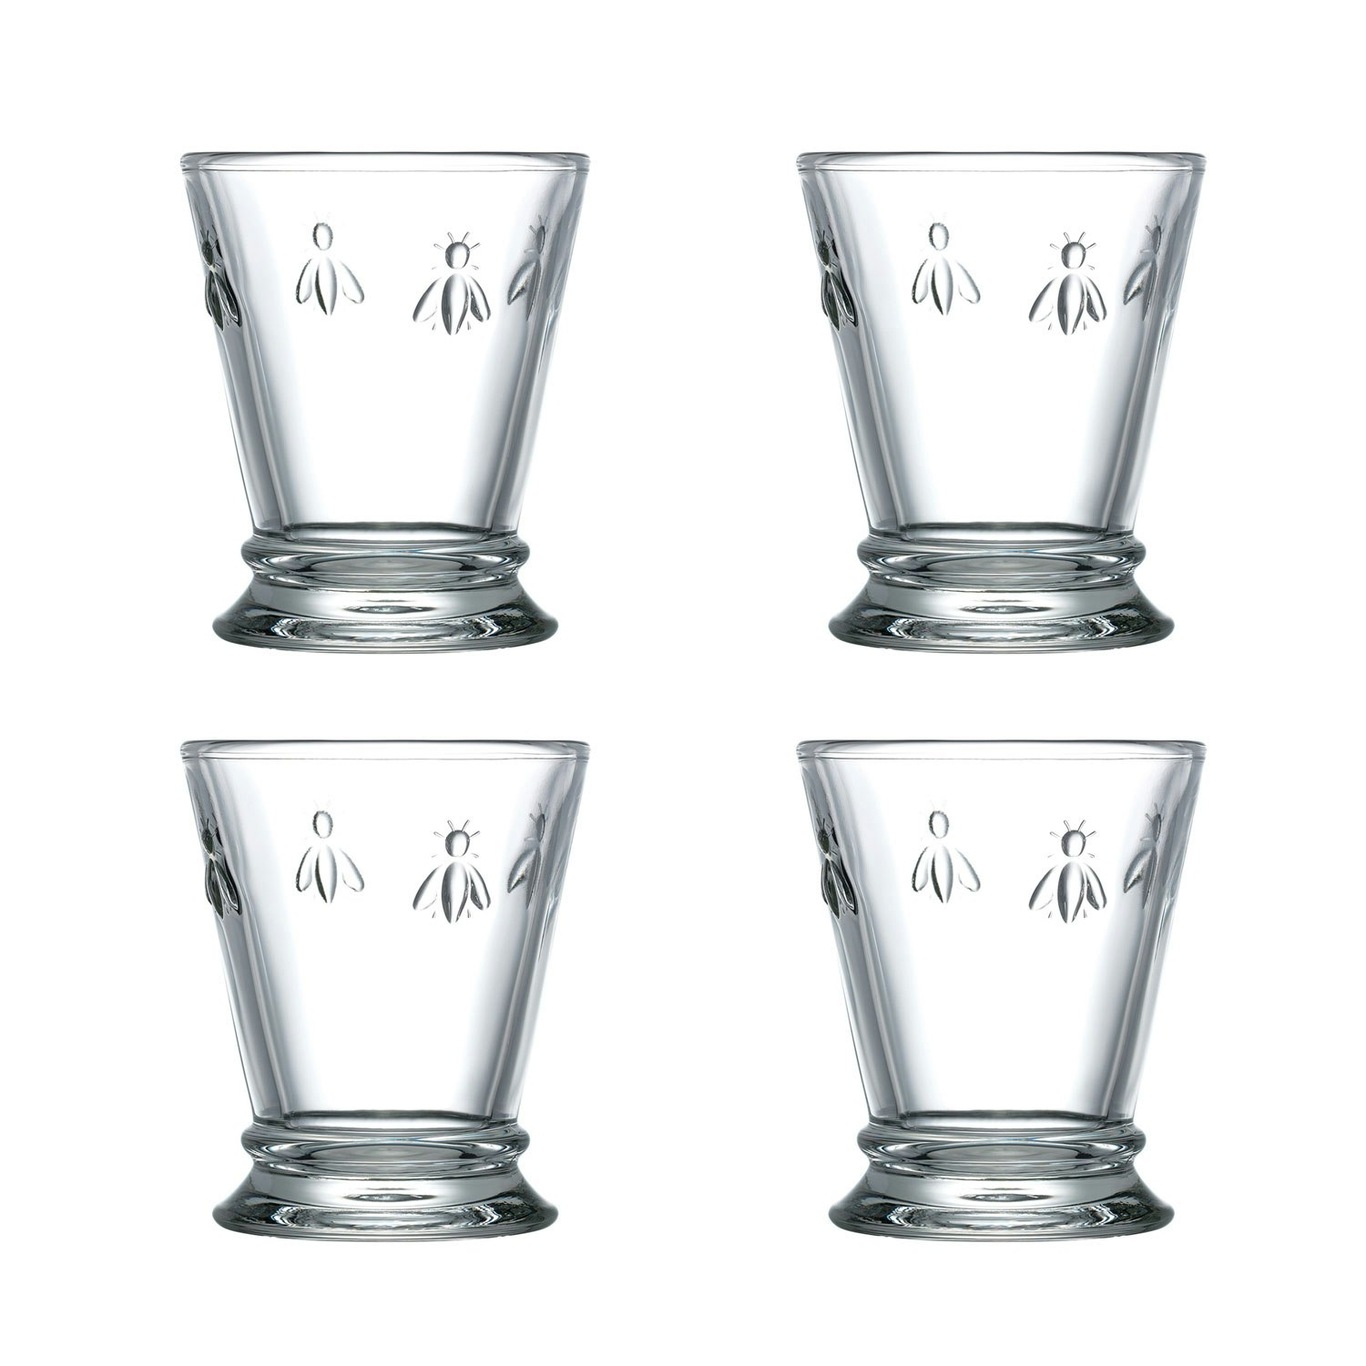 https://royaldesign.com/image/2/la-rochere-abeille-drinking-glass-26-cl-4-pack-0?w=800&quality=80